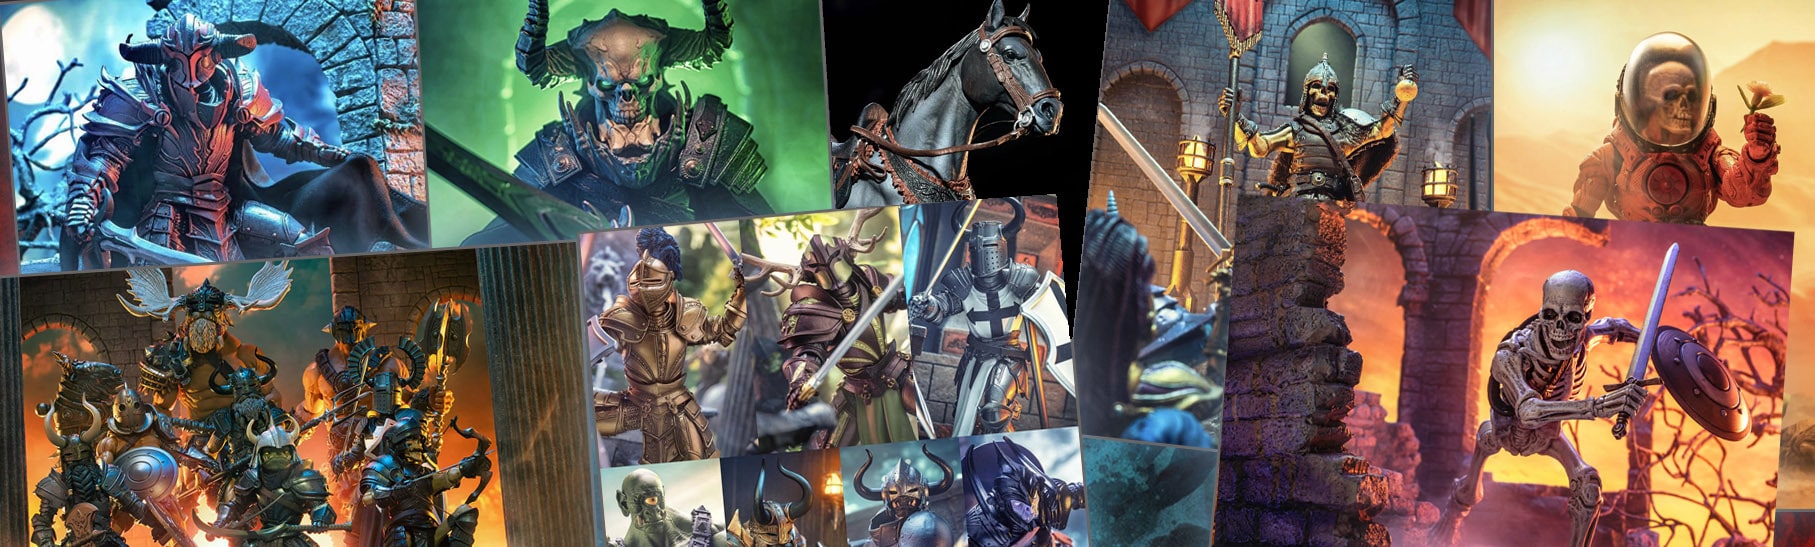 Four Horsemen Studios - Mythic Legions